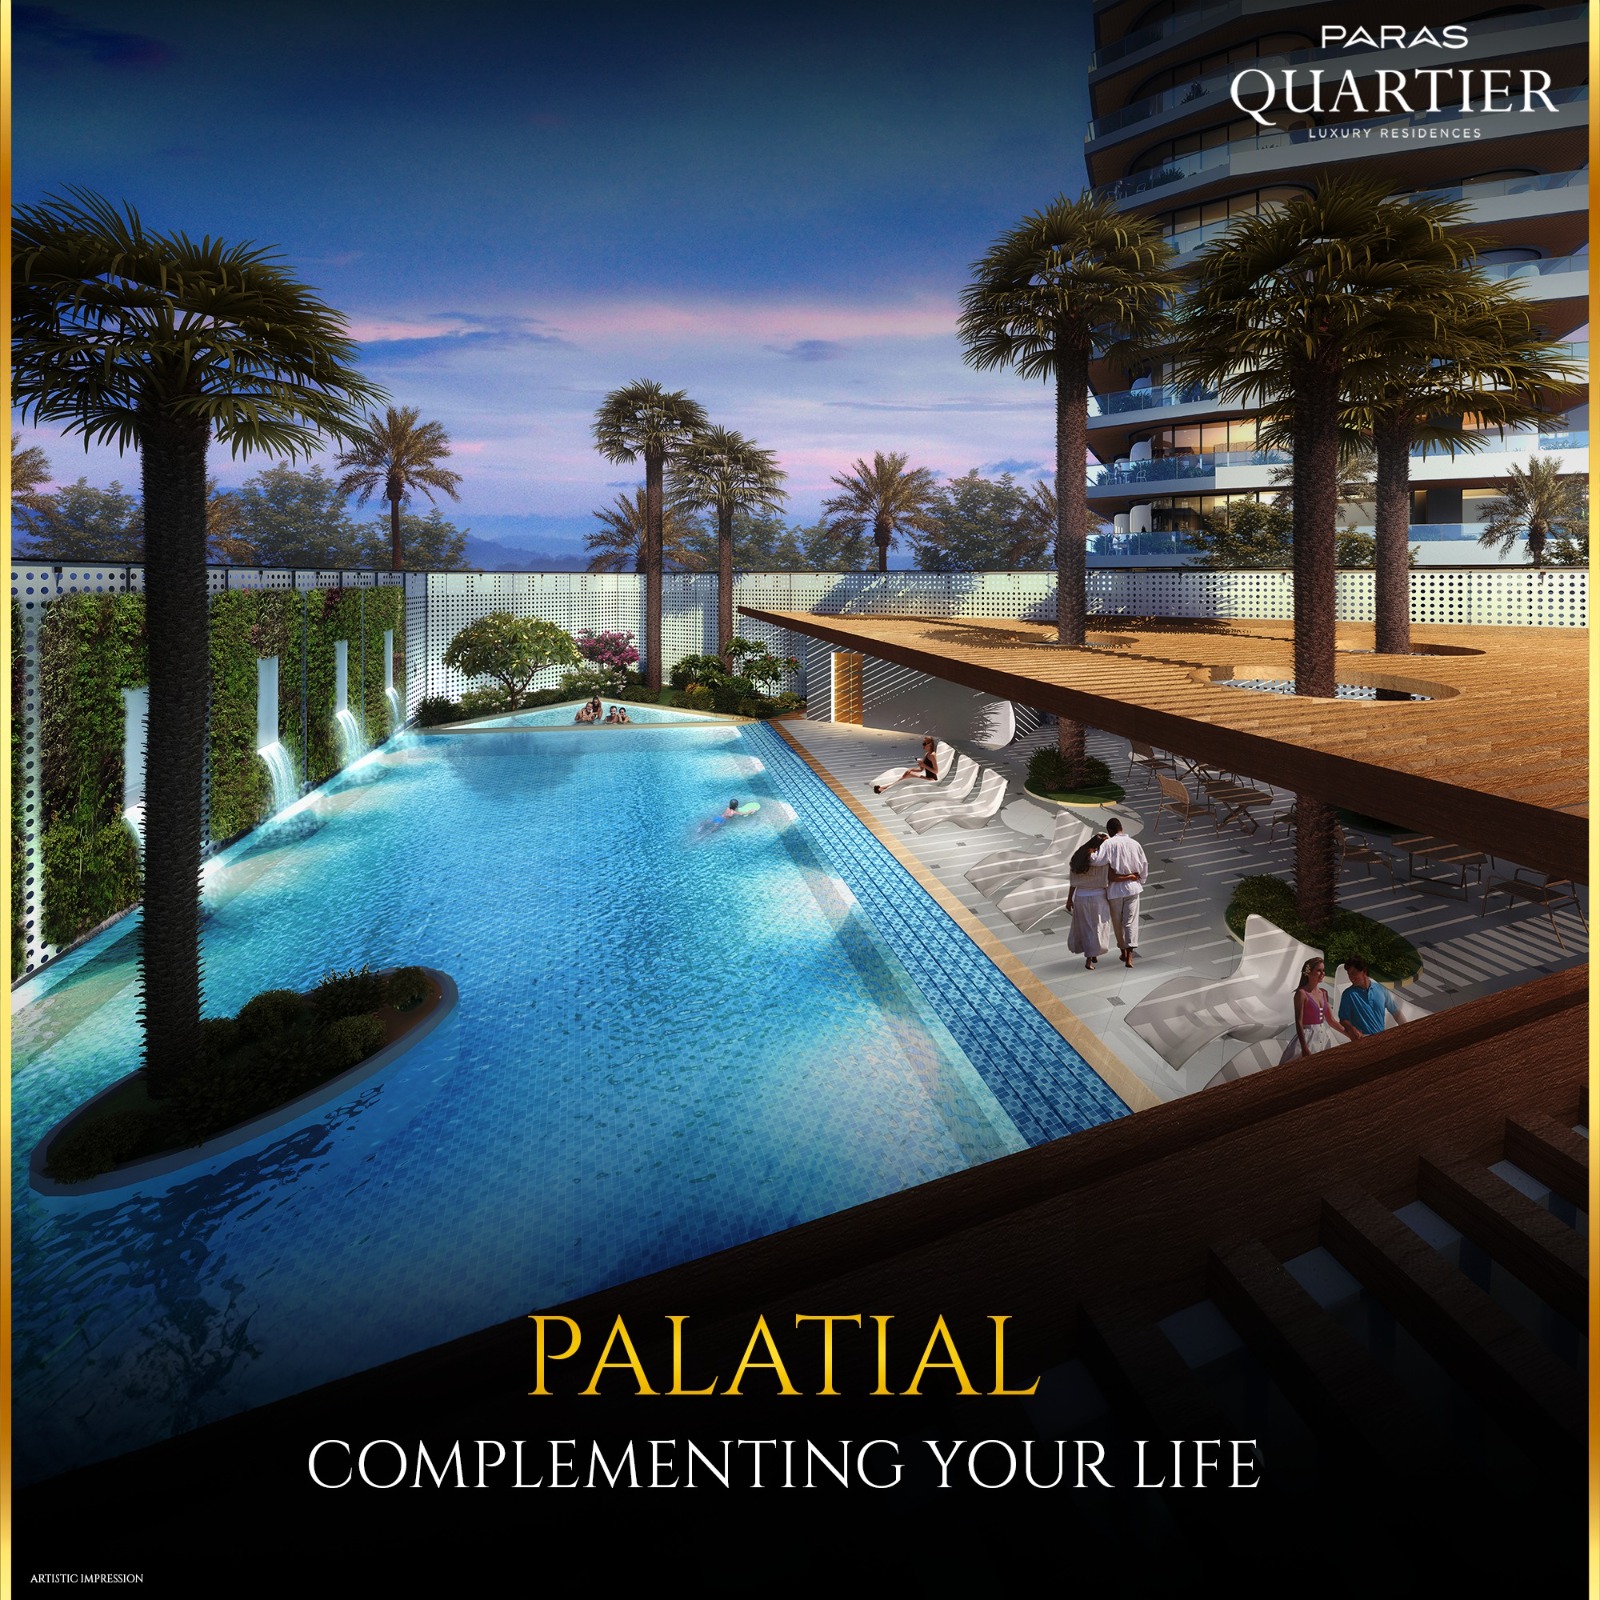 Paras Quartier: Redefining Elegance in Luxury Residences Update